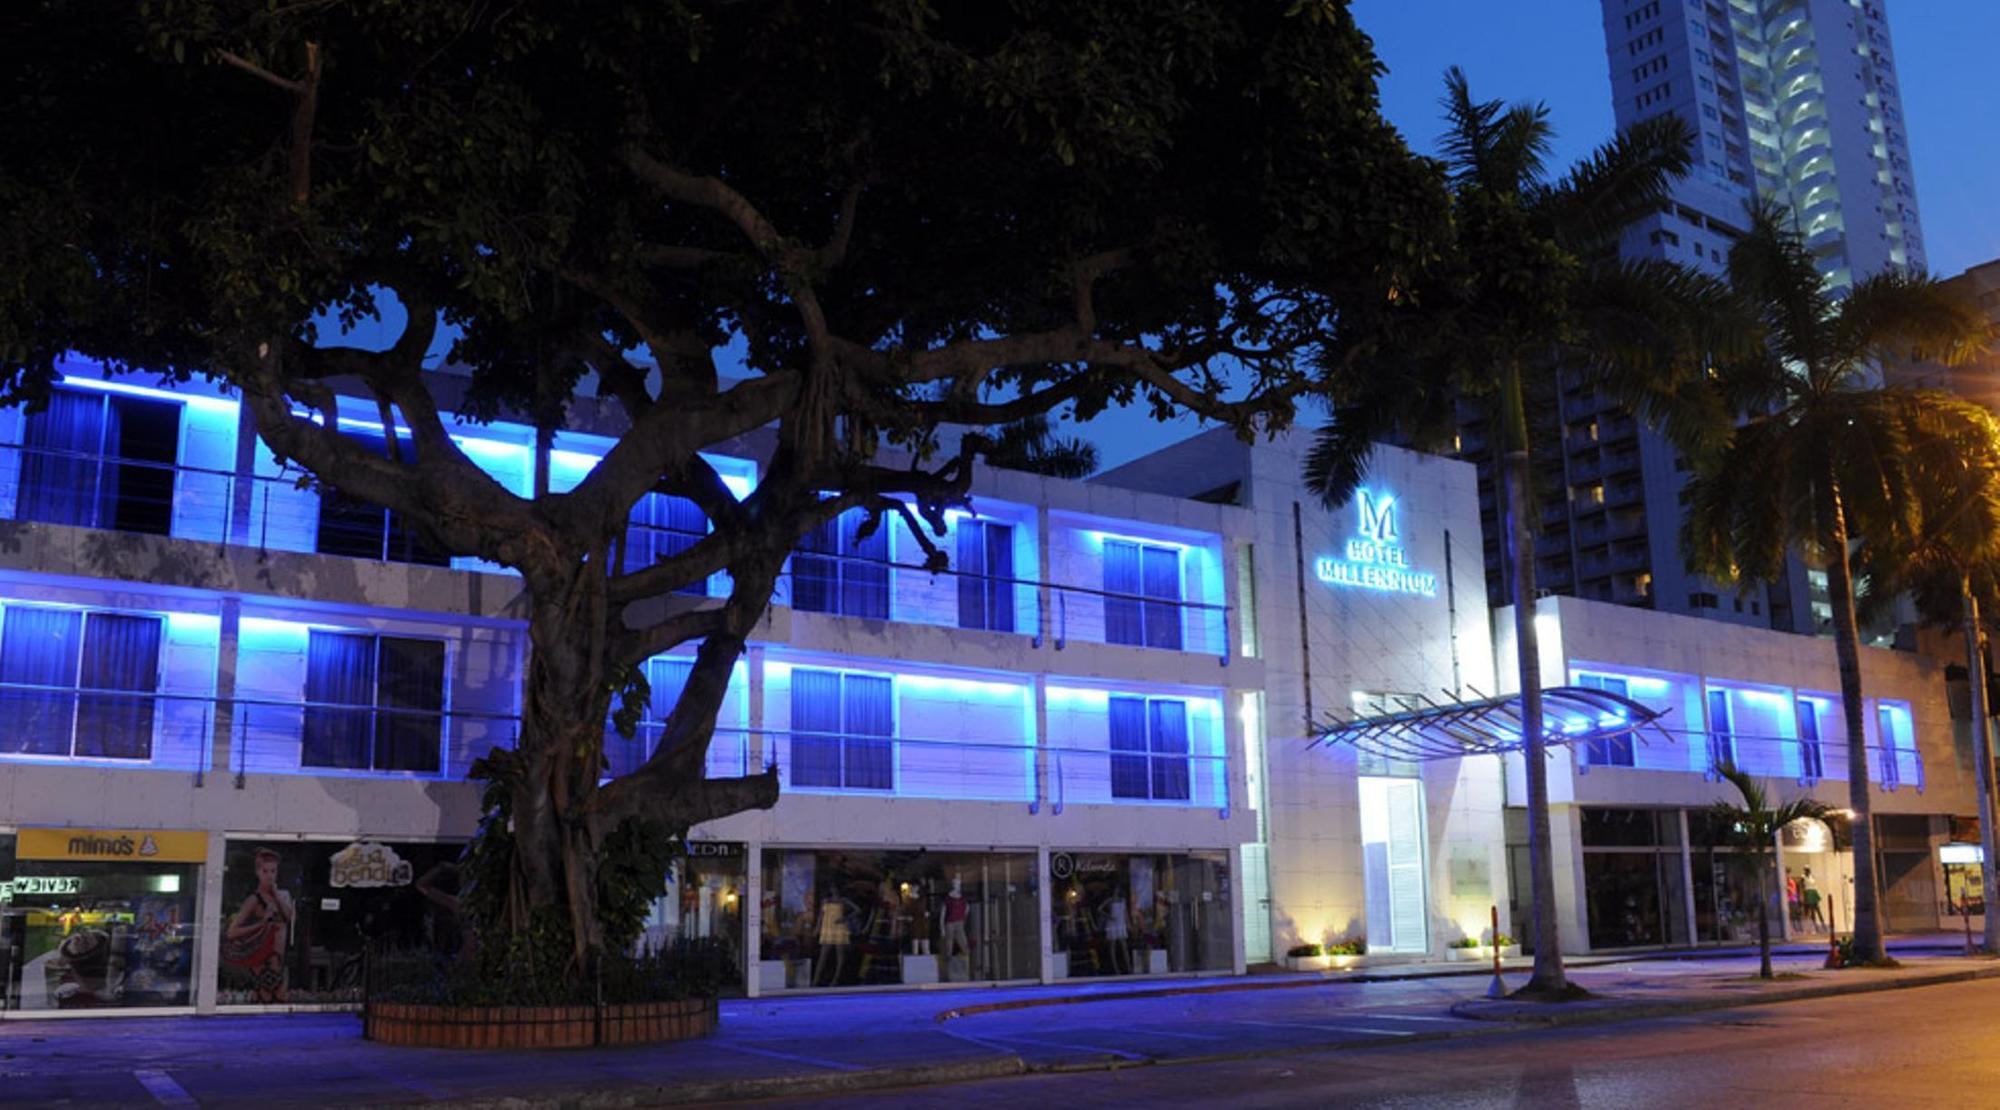 Madisson Boutique Hotel Cartagena Екстериор снимка